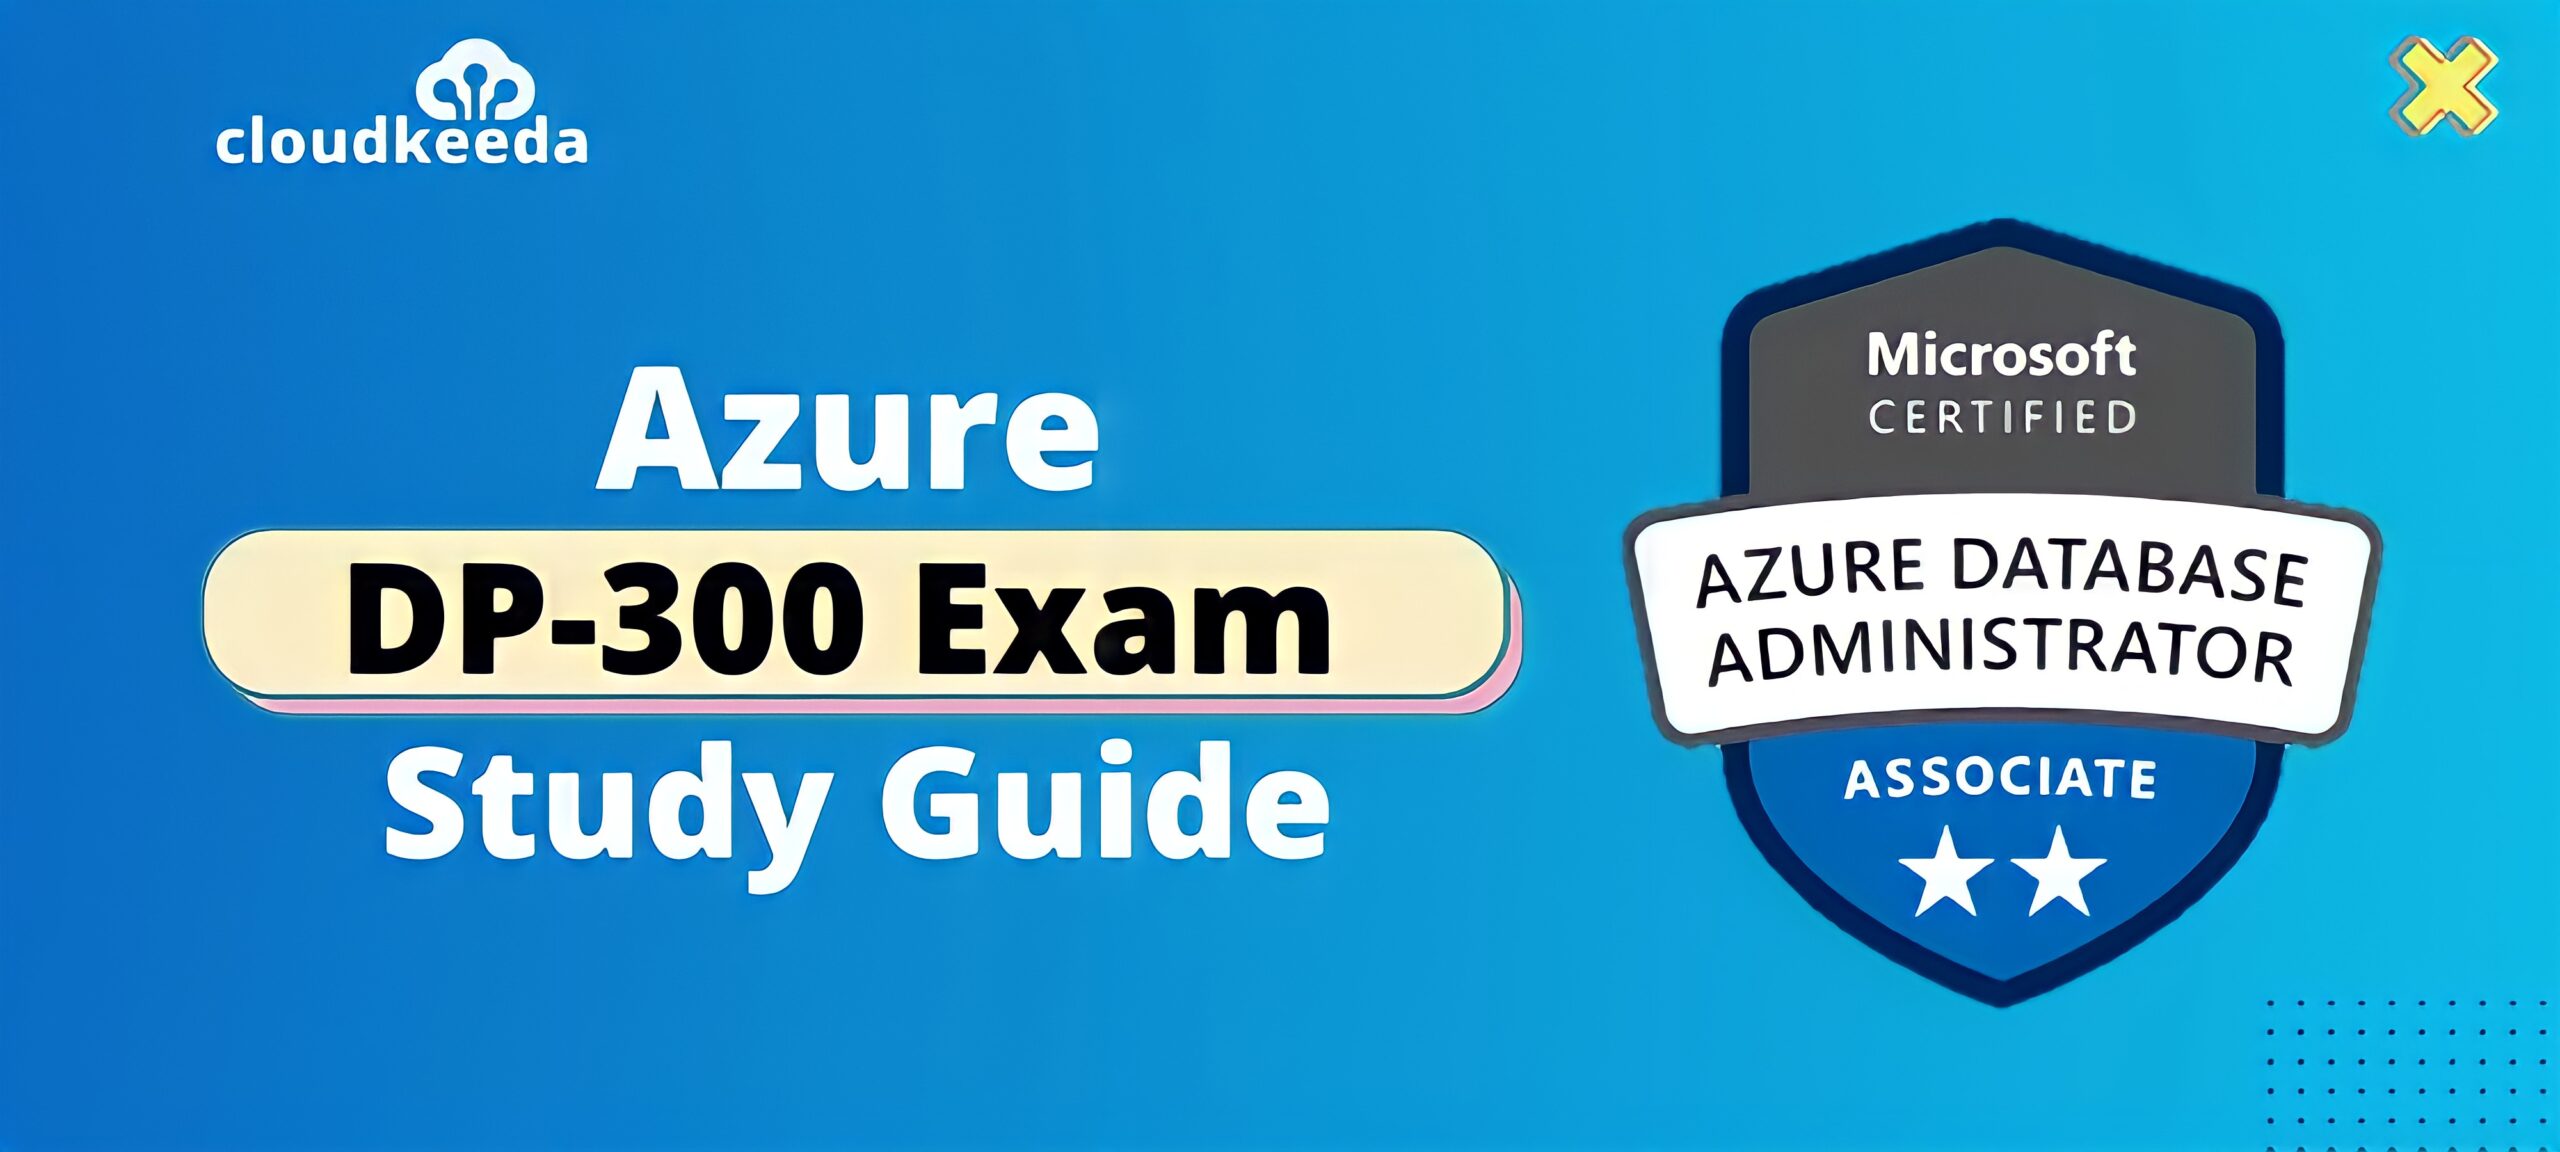 DP 300 Study Guide: Azure Database Administrator Exam